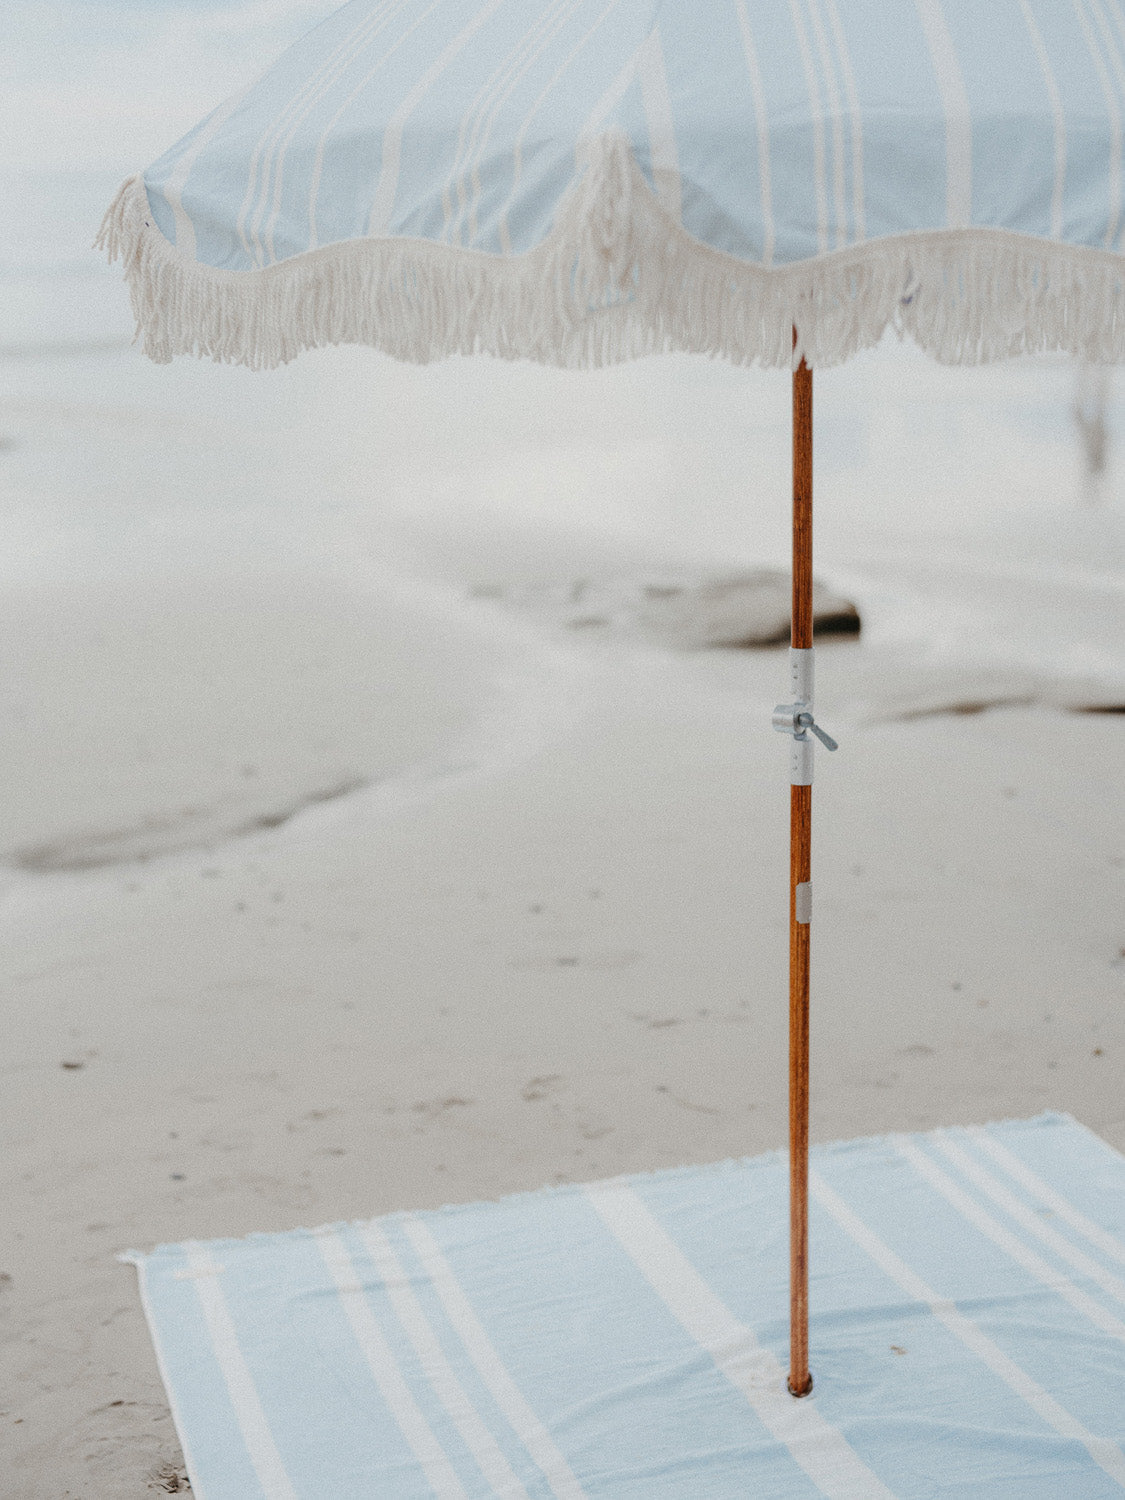 The Beach Blanket